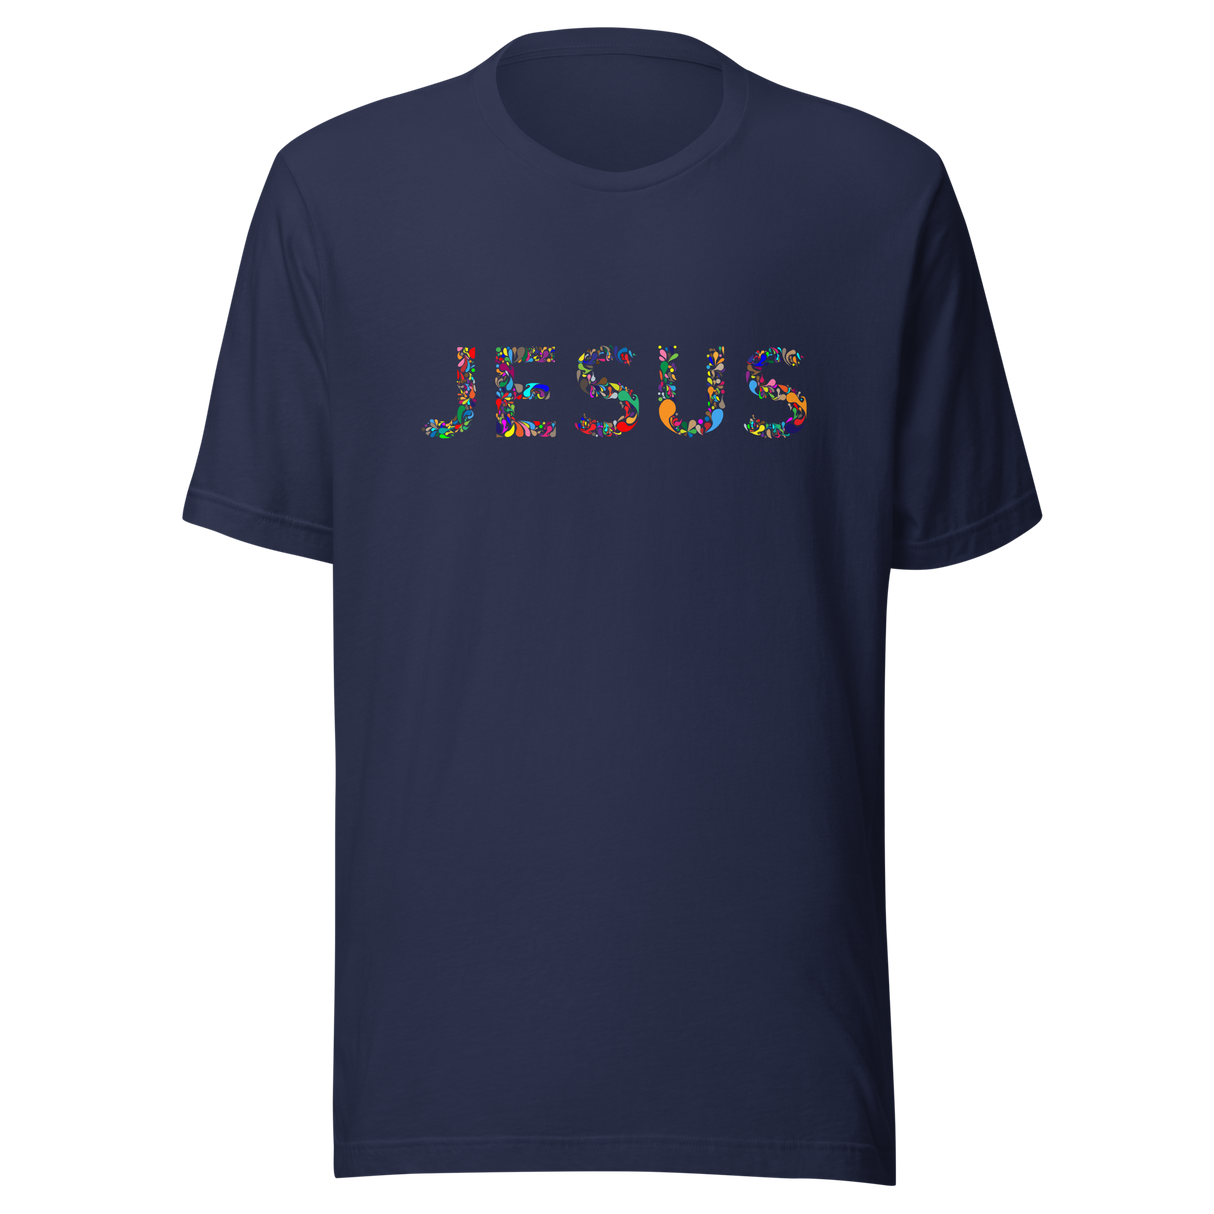 Jesus - Christian Tee - Jesus T-Shirt - God Tee - Faith T-Shirt - Religion Tee